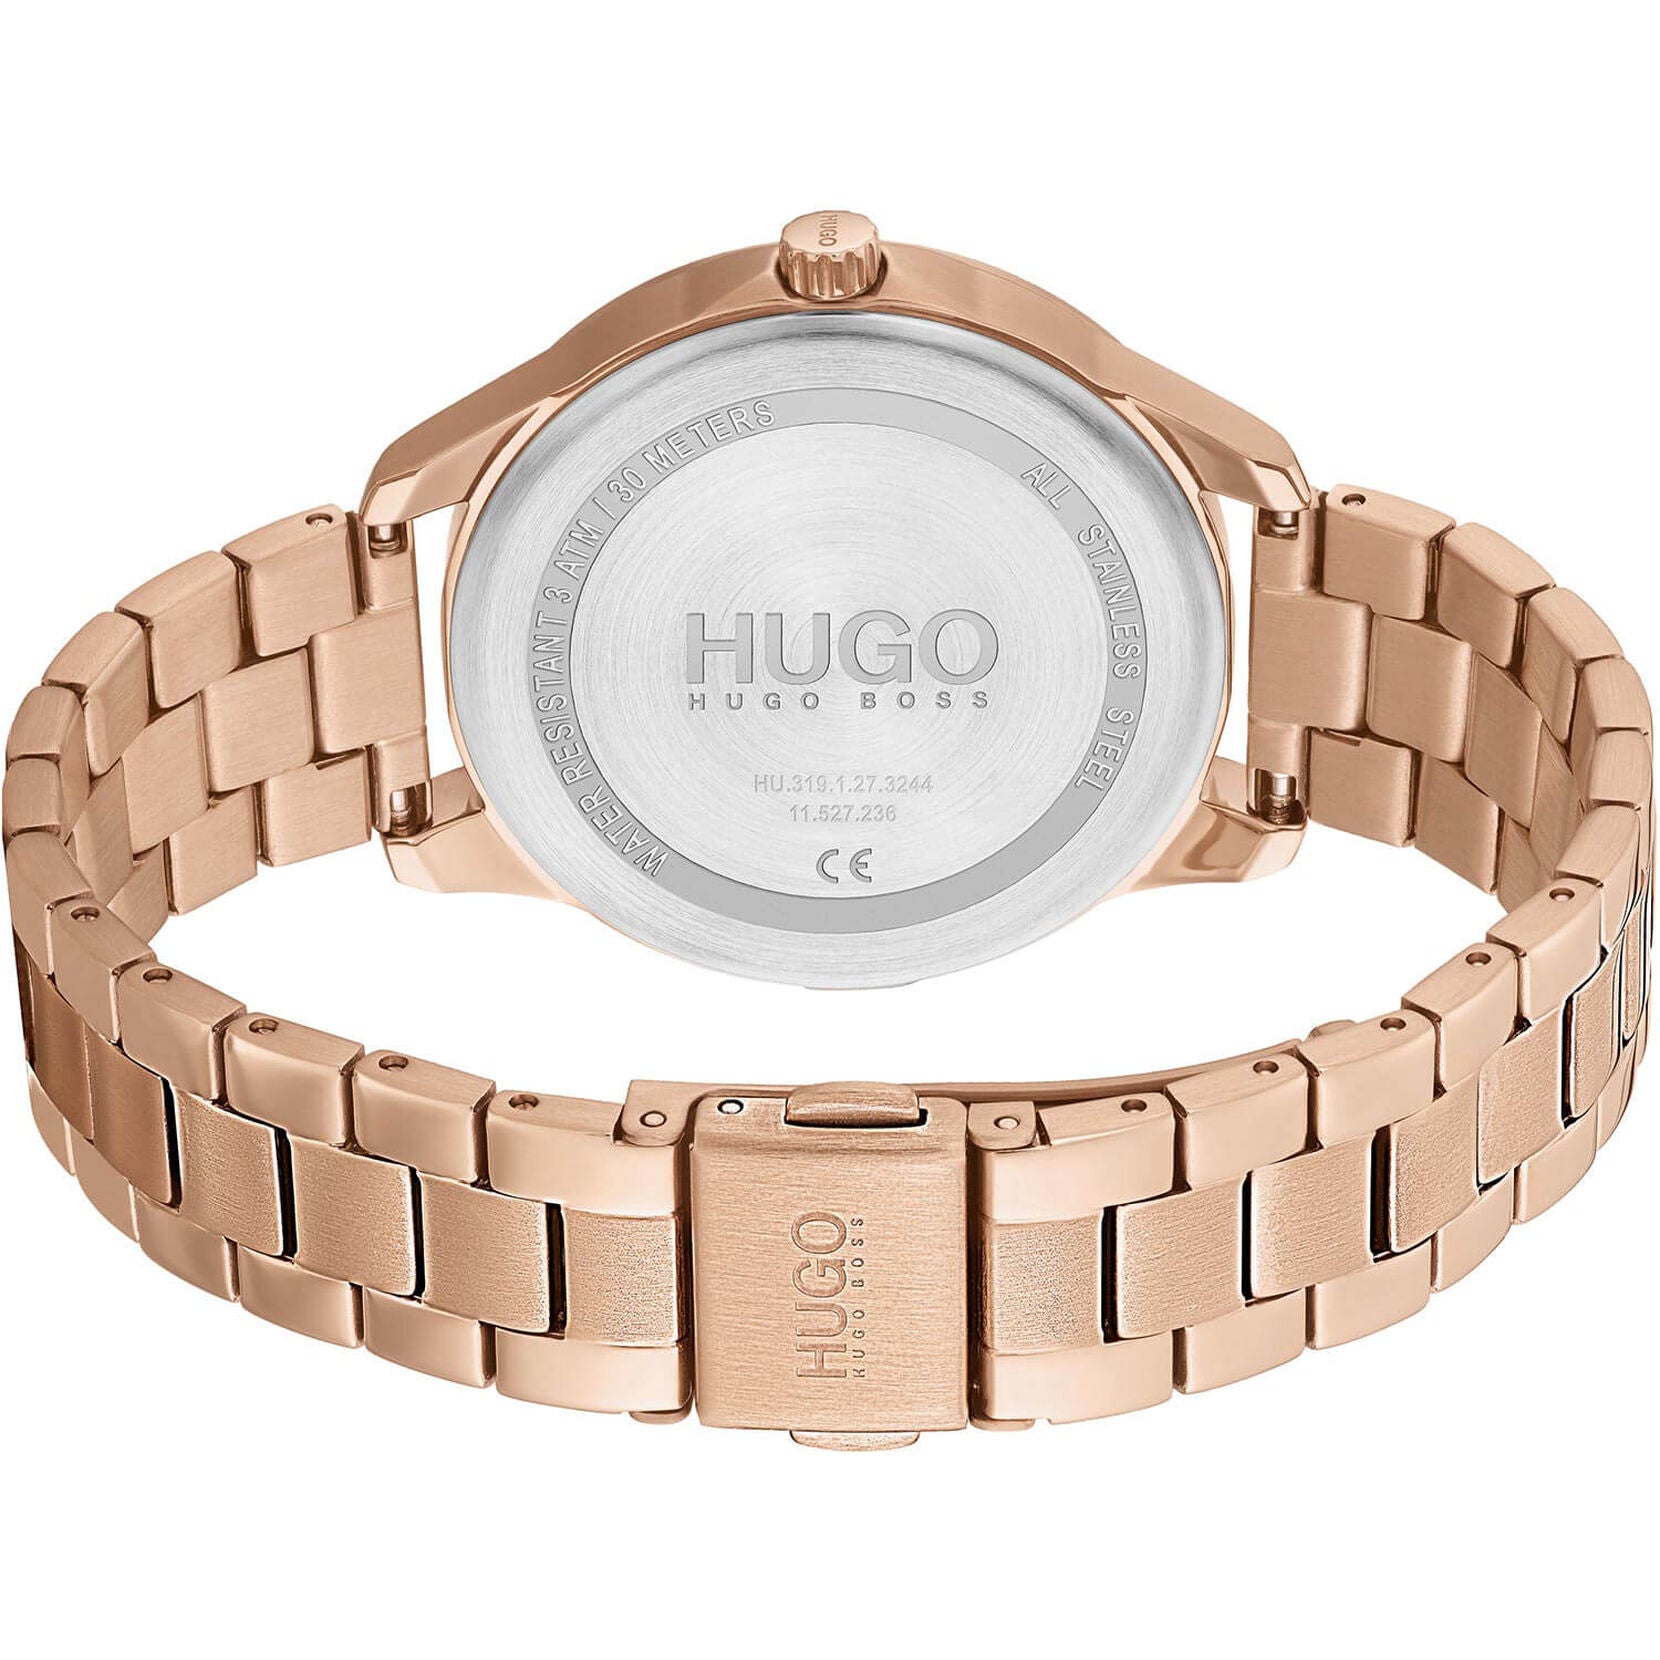 Hugo Boss Hugo Boss Fearless Quartz Dial Ladies Watch 1540049